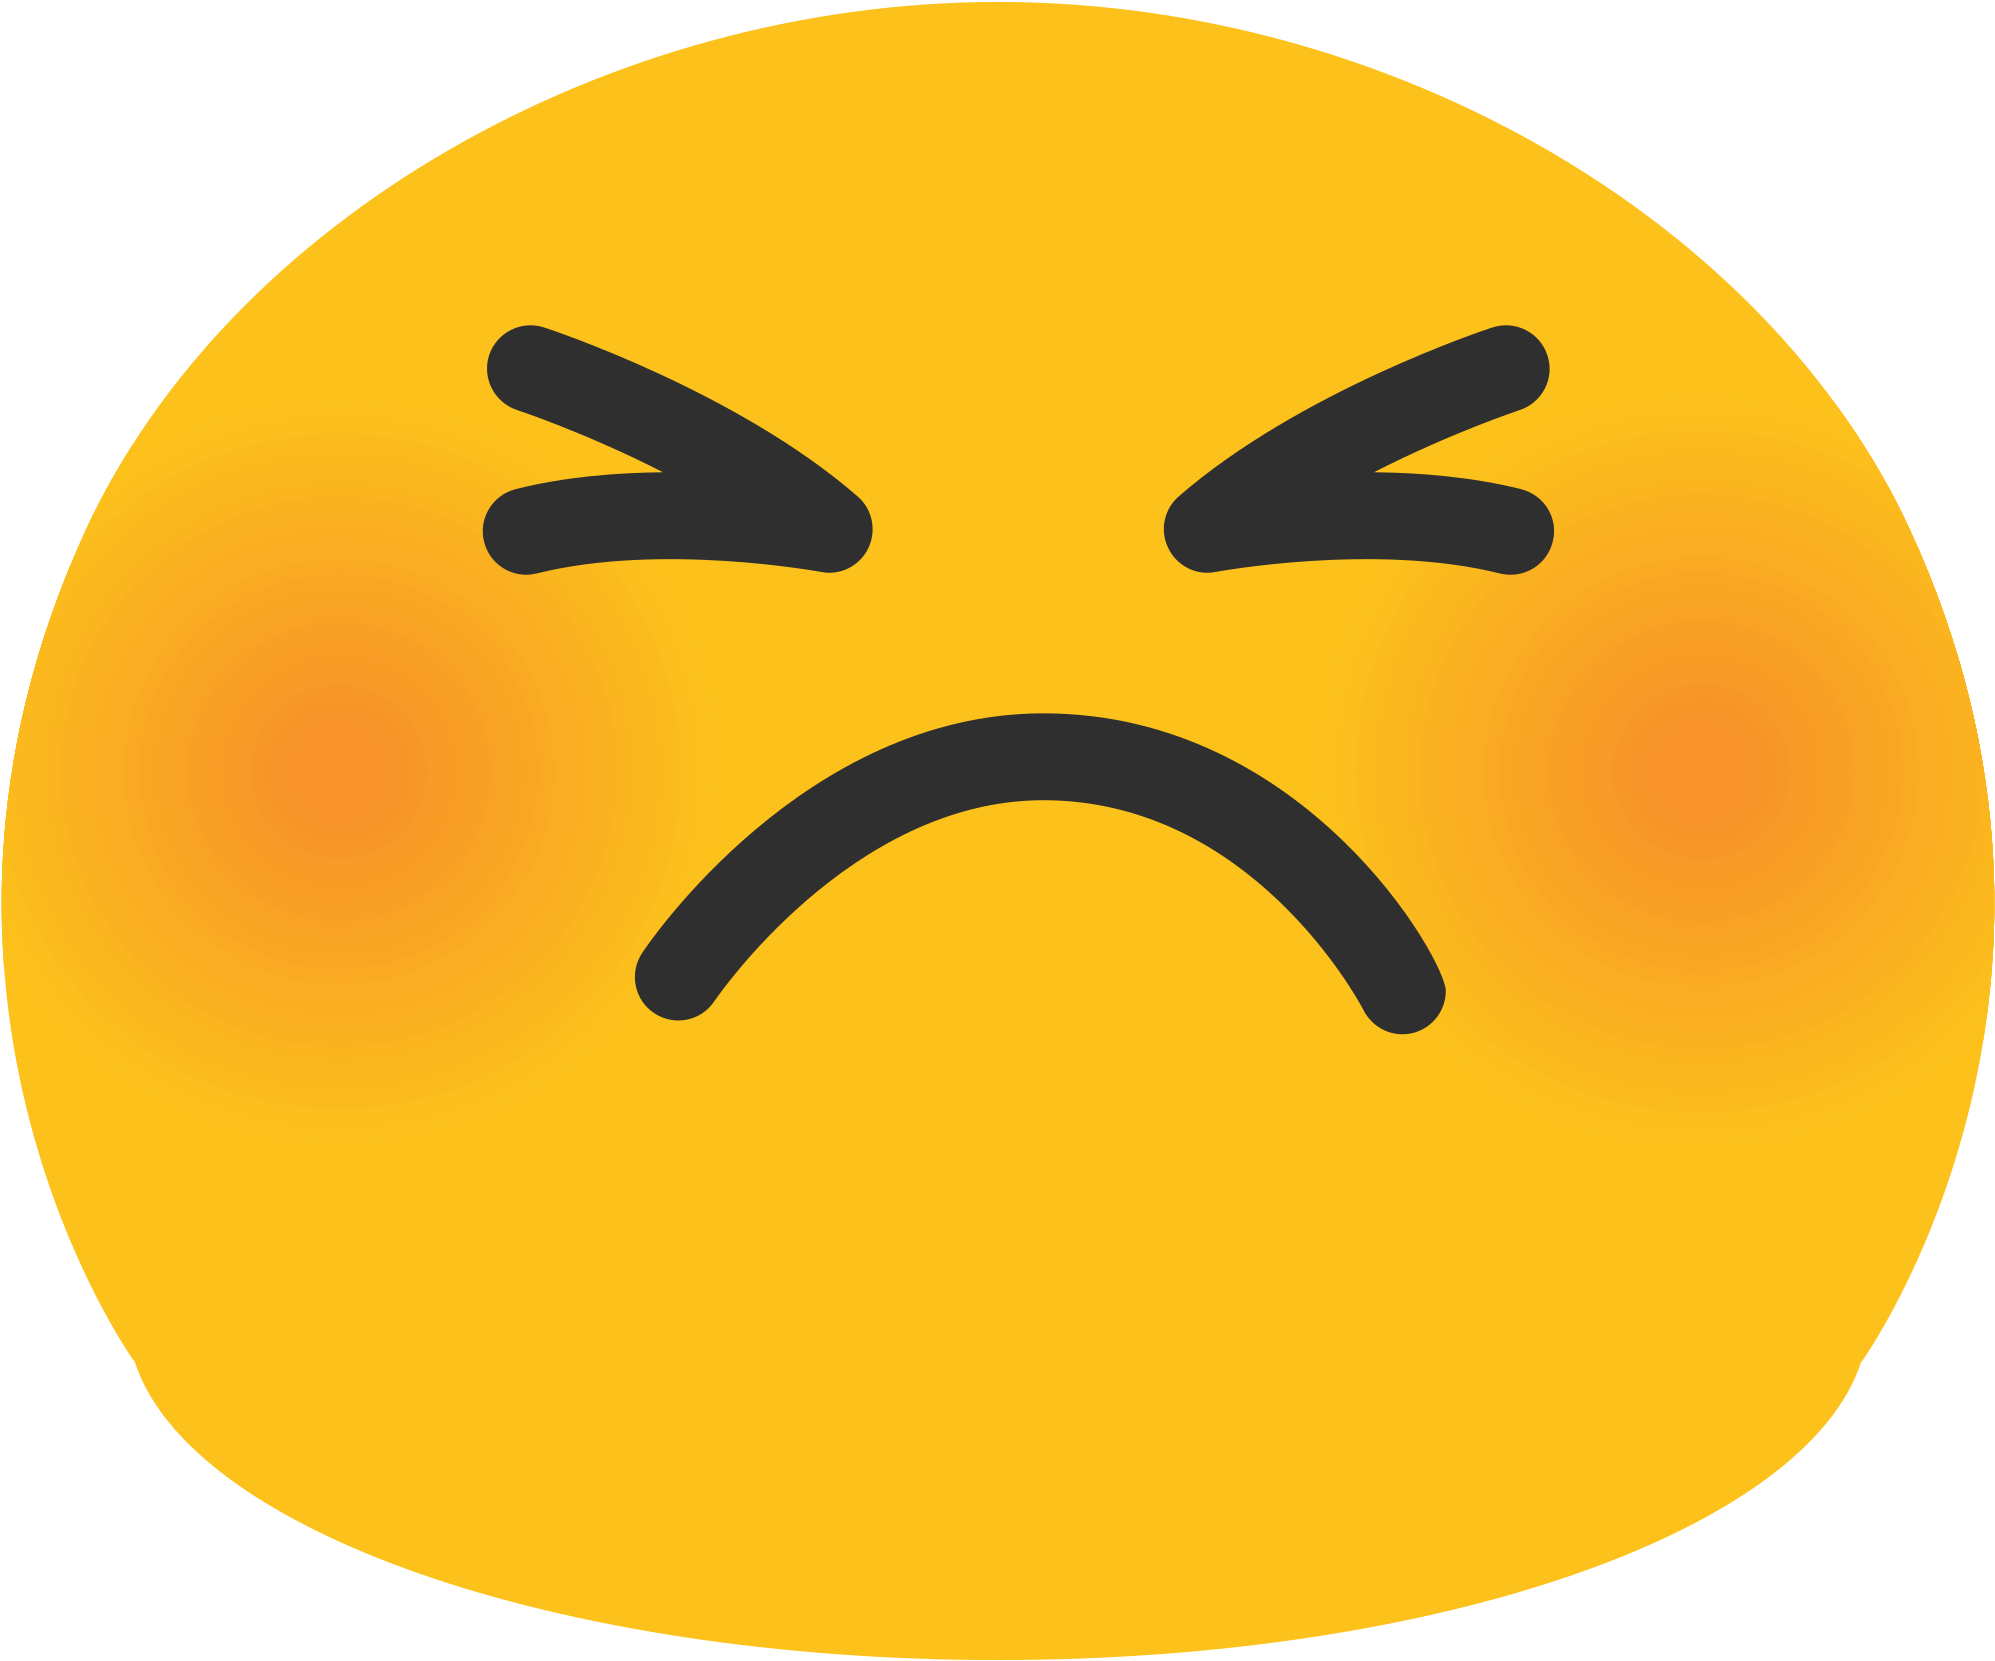 Angry Face Emoji PNG Transparent Image